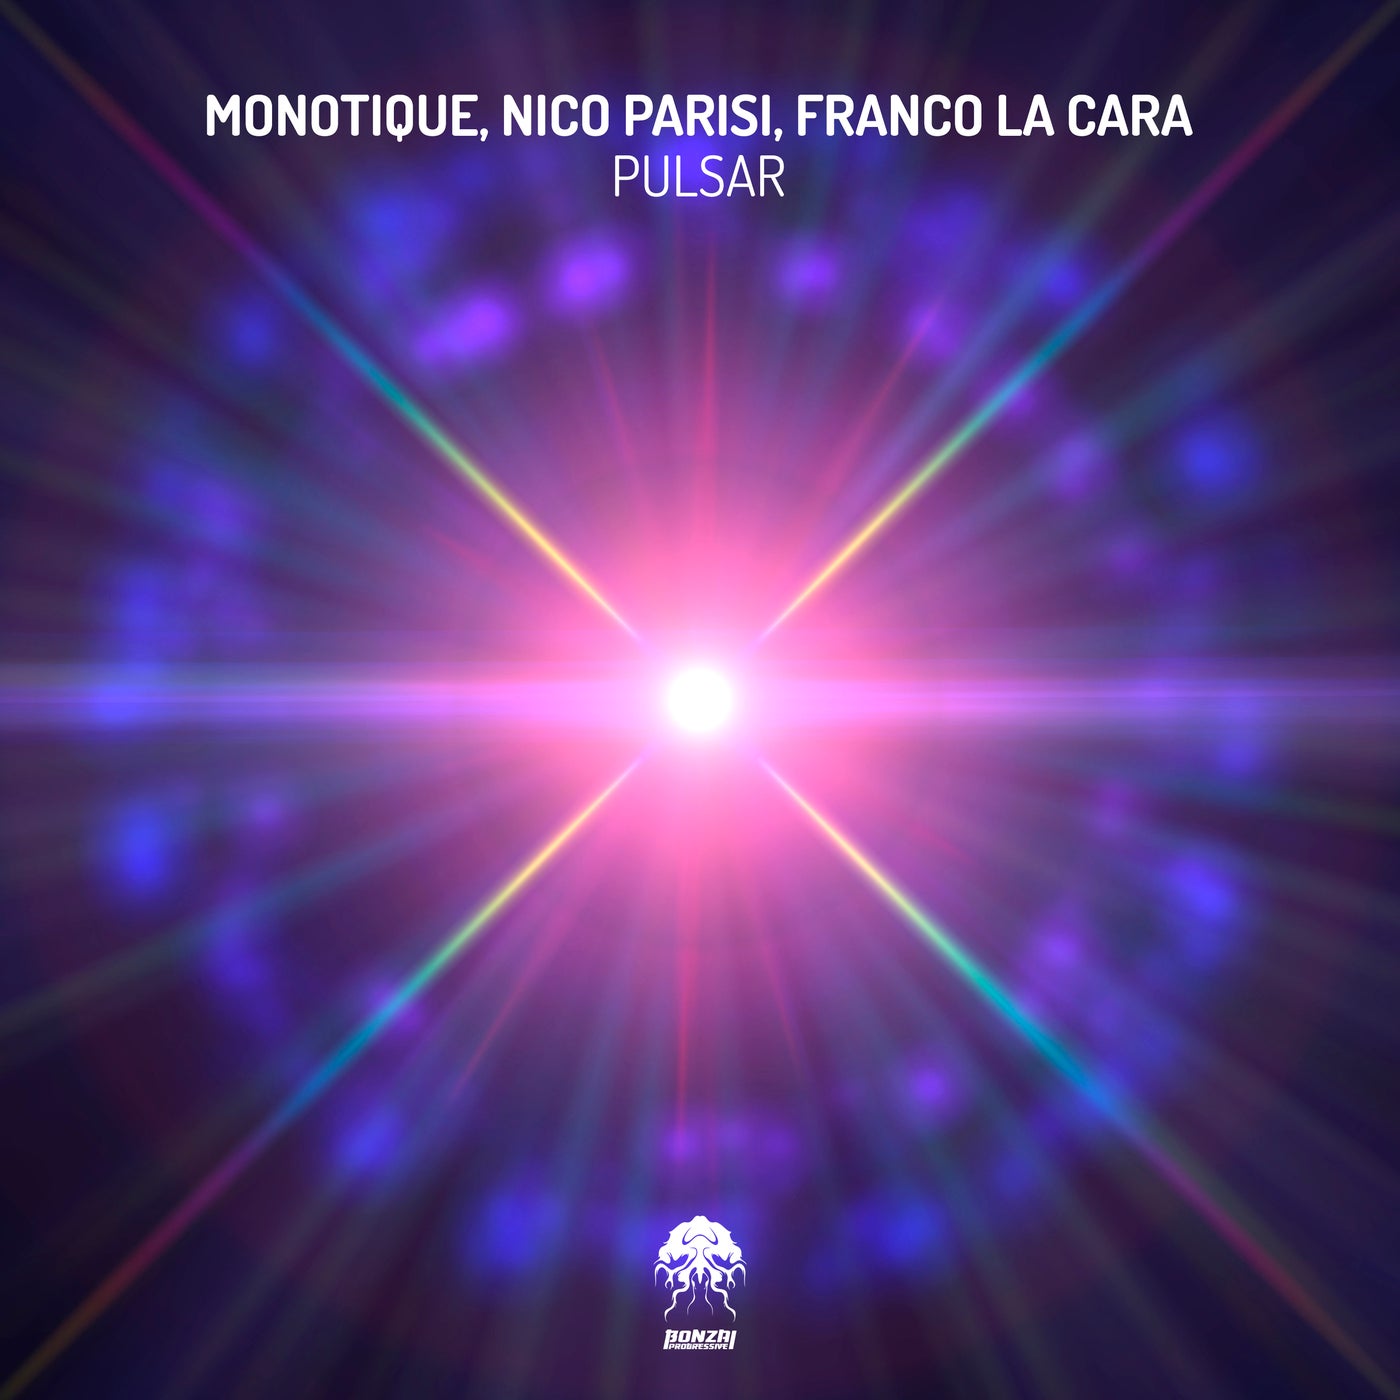 Nico Parisi, Franco la Cara, Monotique - Pulsar (Original Mix)